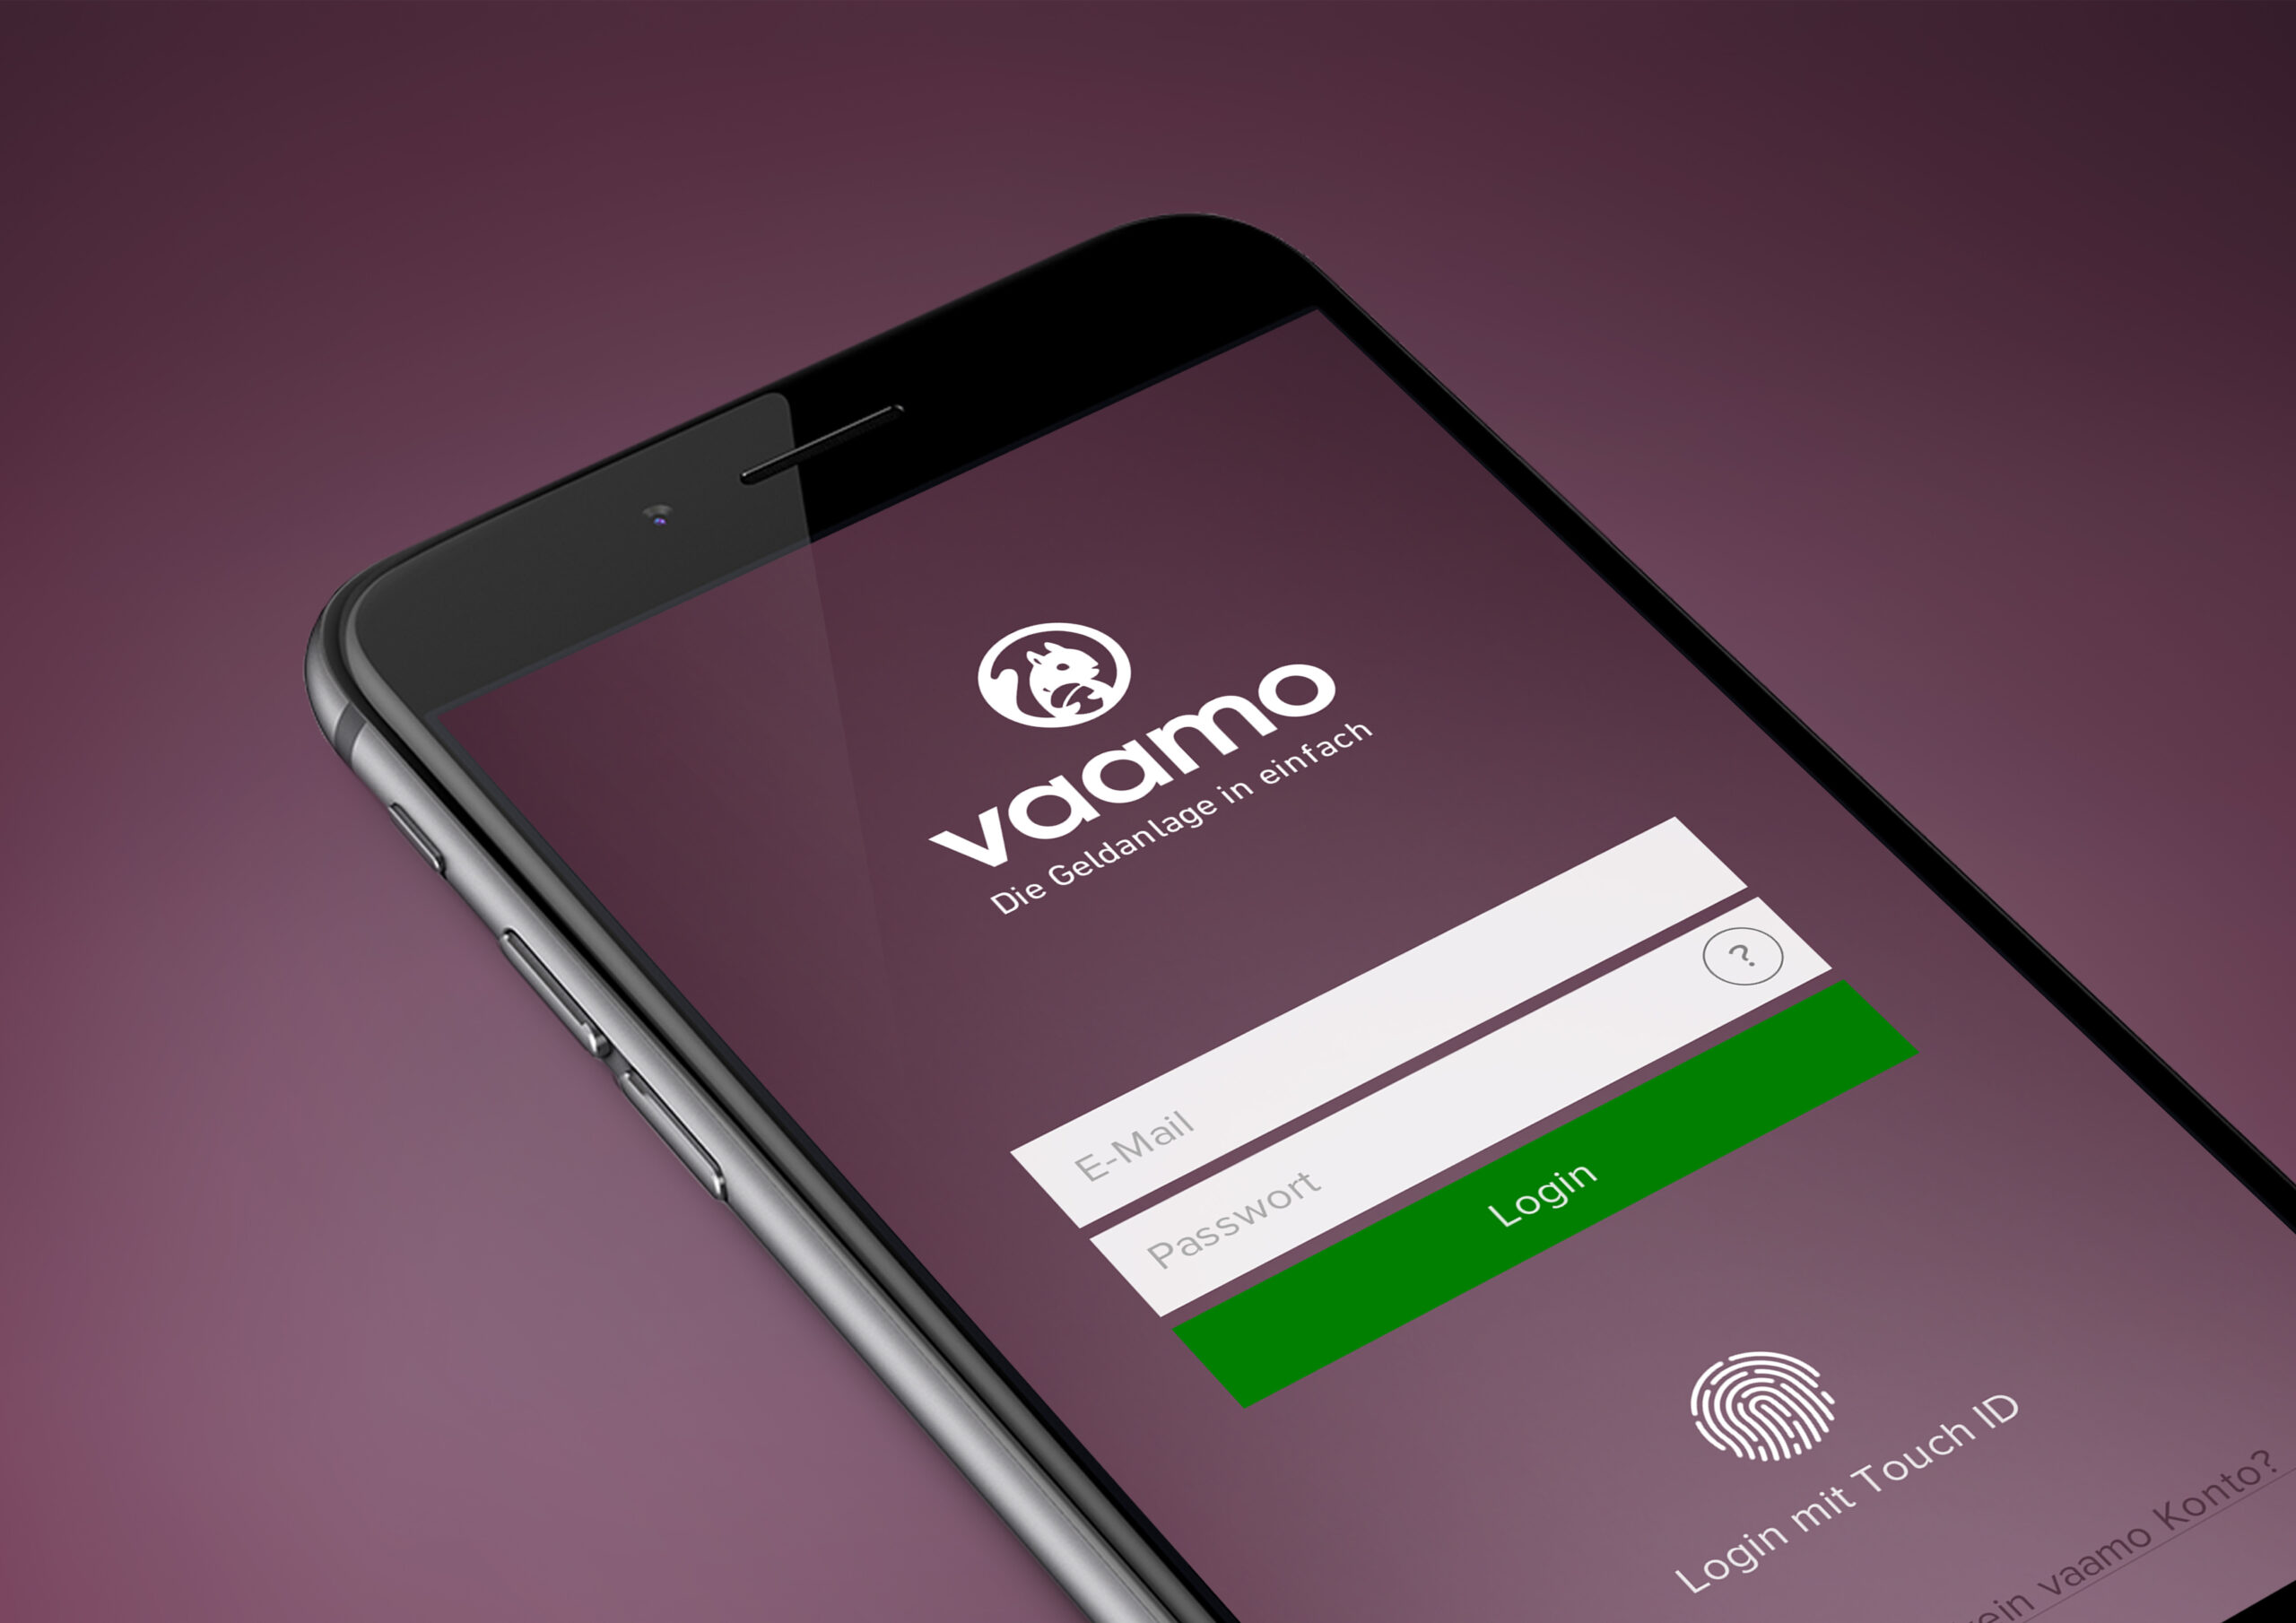 Appdesign Vaamo - User Experience Login